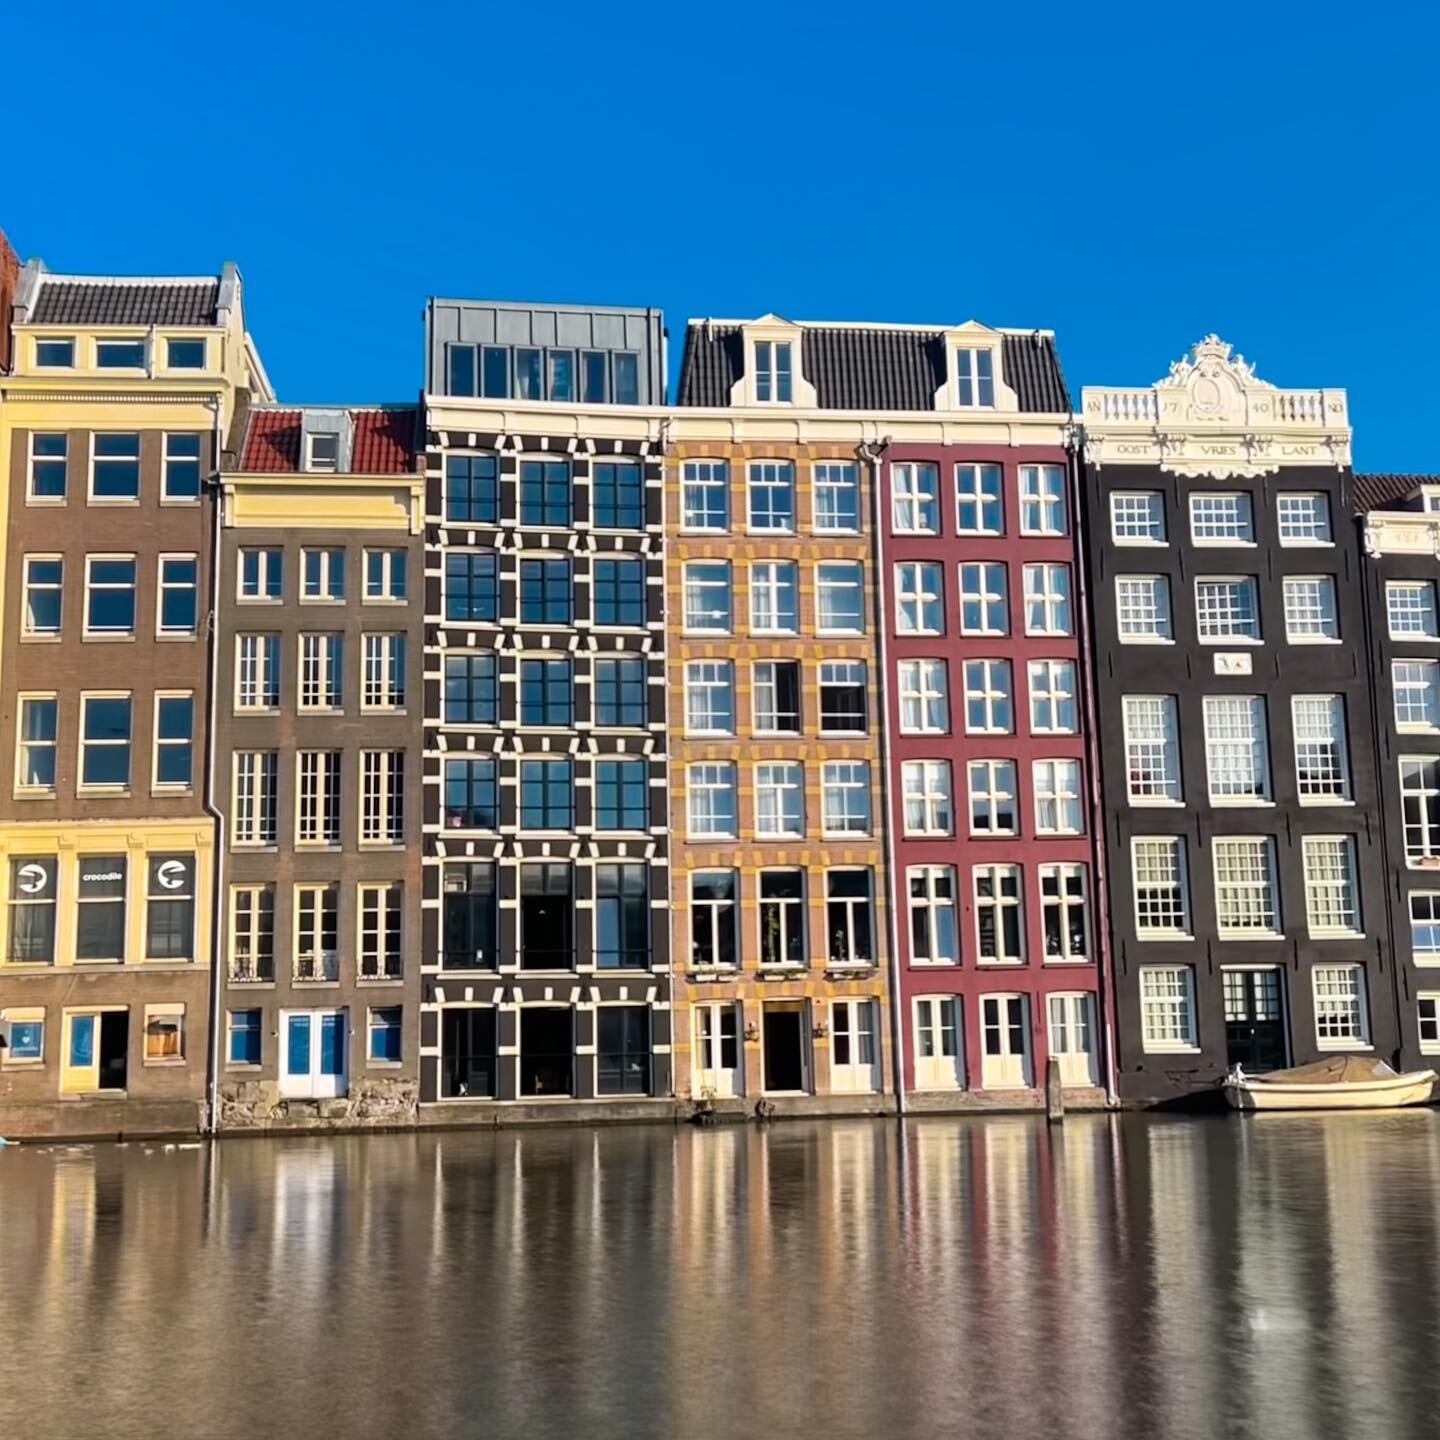 Amsterdam 2022

#amsterdam #holland #netherlands #canal #hiking #travel #backpacking #solotraveller #iphone #travelphotography #seascape #hikingadventure #photography  #picoftheday #travel_photography #landscapephotography#bnwphotography #ig_landscap